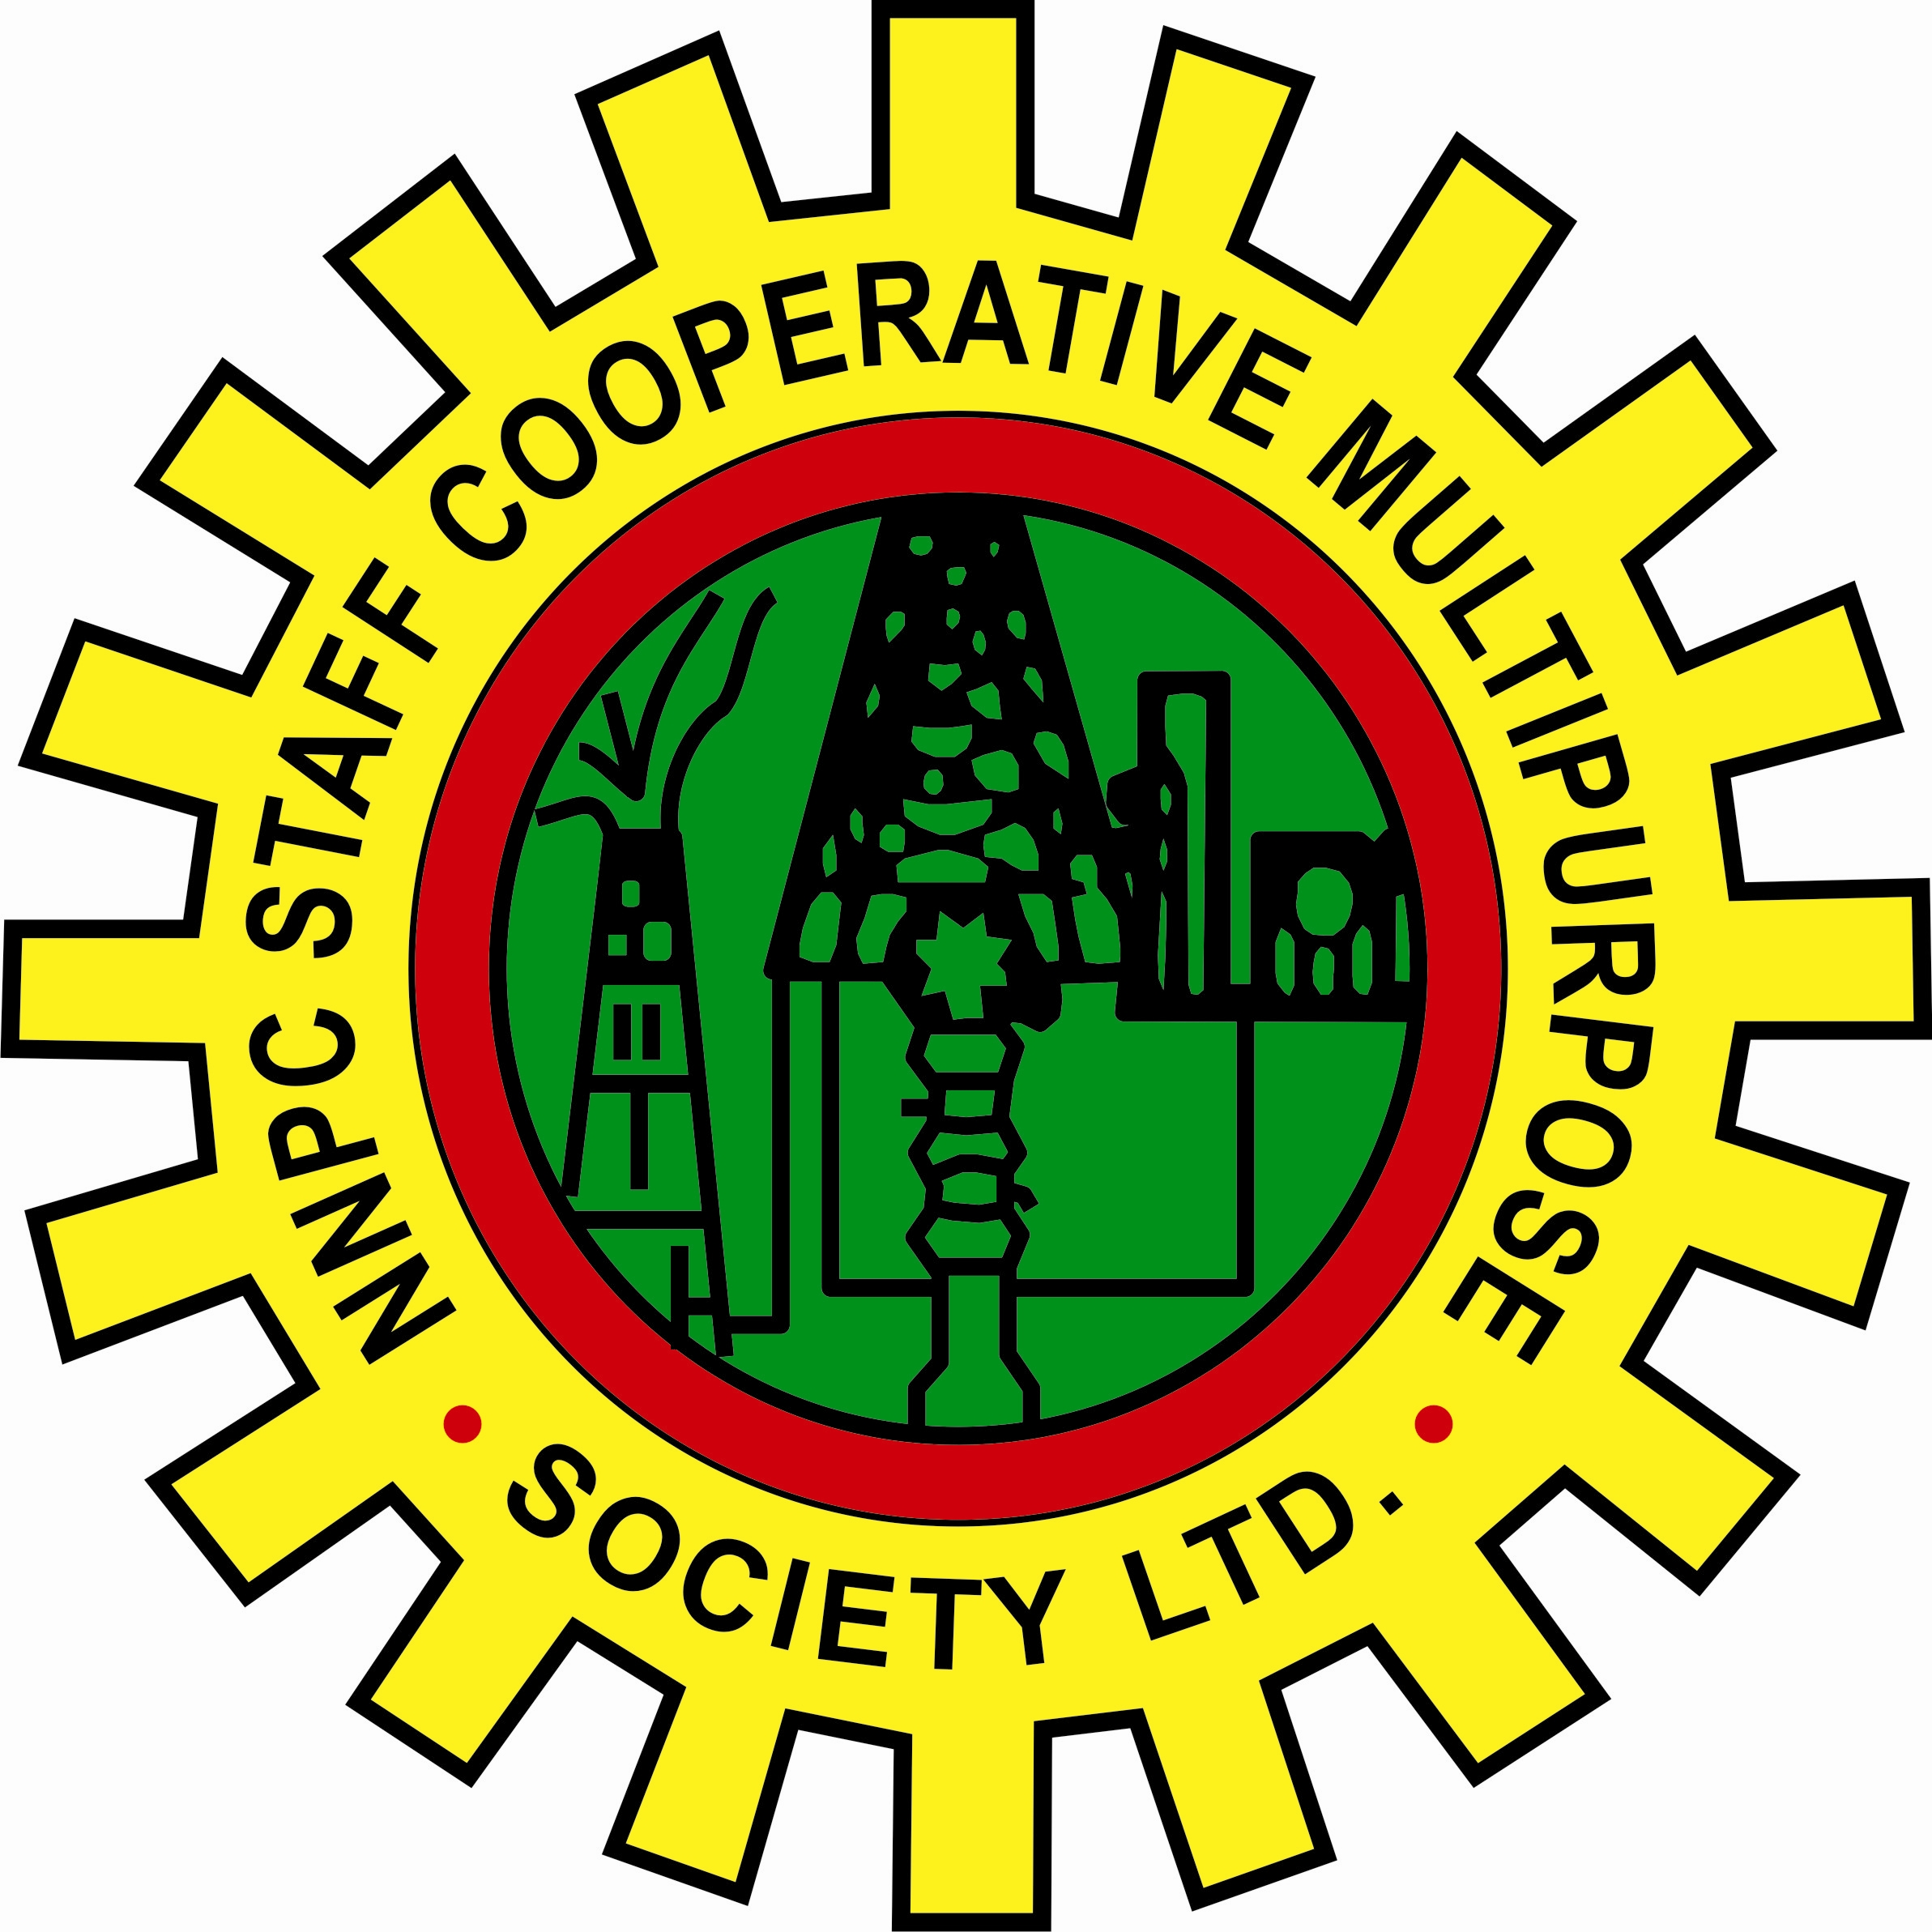 Nigerian National Petroleum Corporation